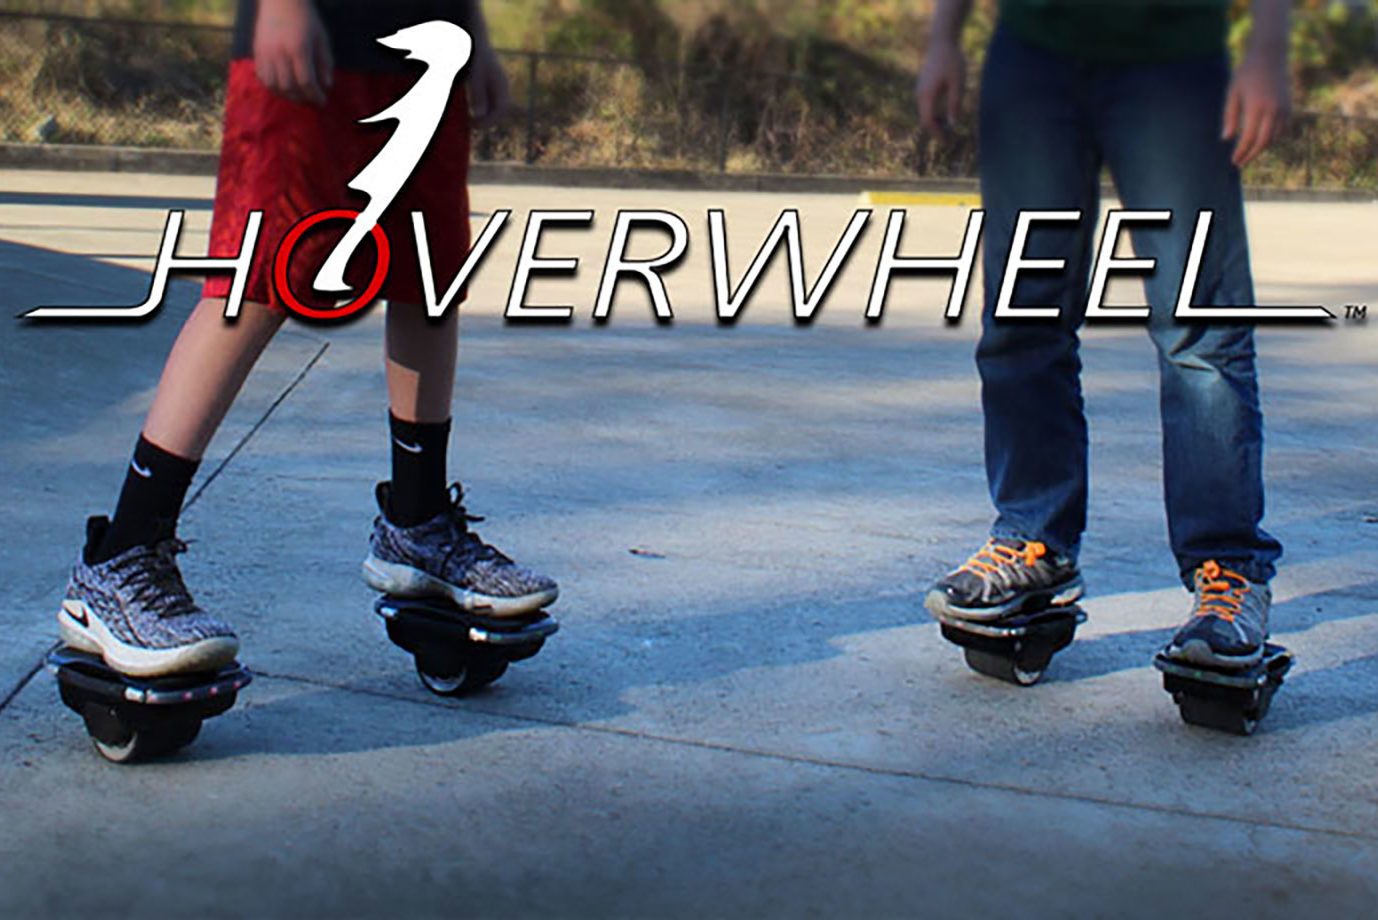 Inventist Hoverwheels Skating Hoverboard Transport Device (Original) - Upzy.com